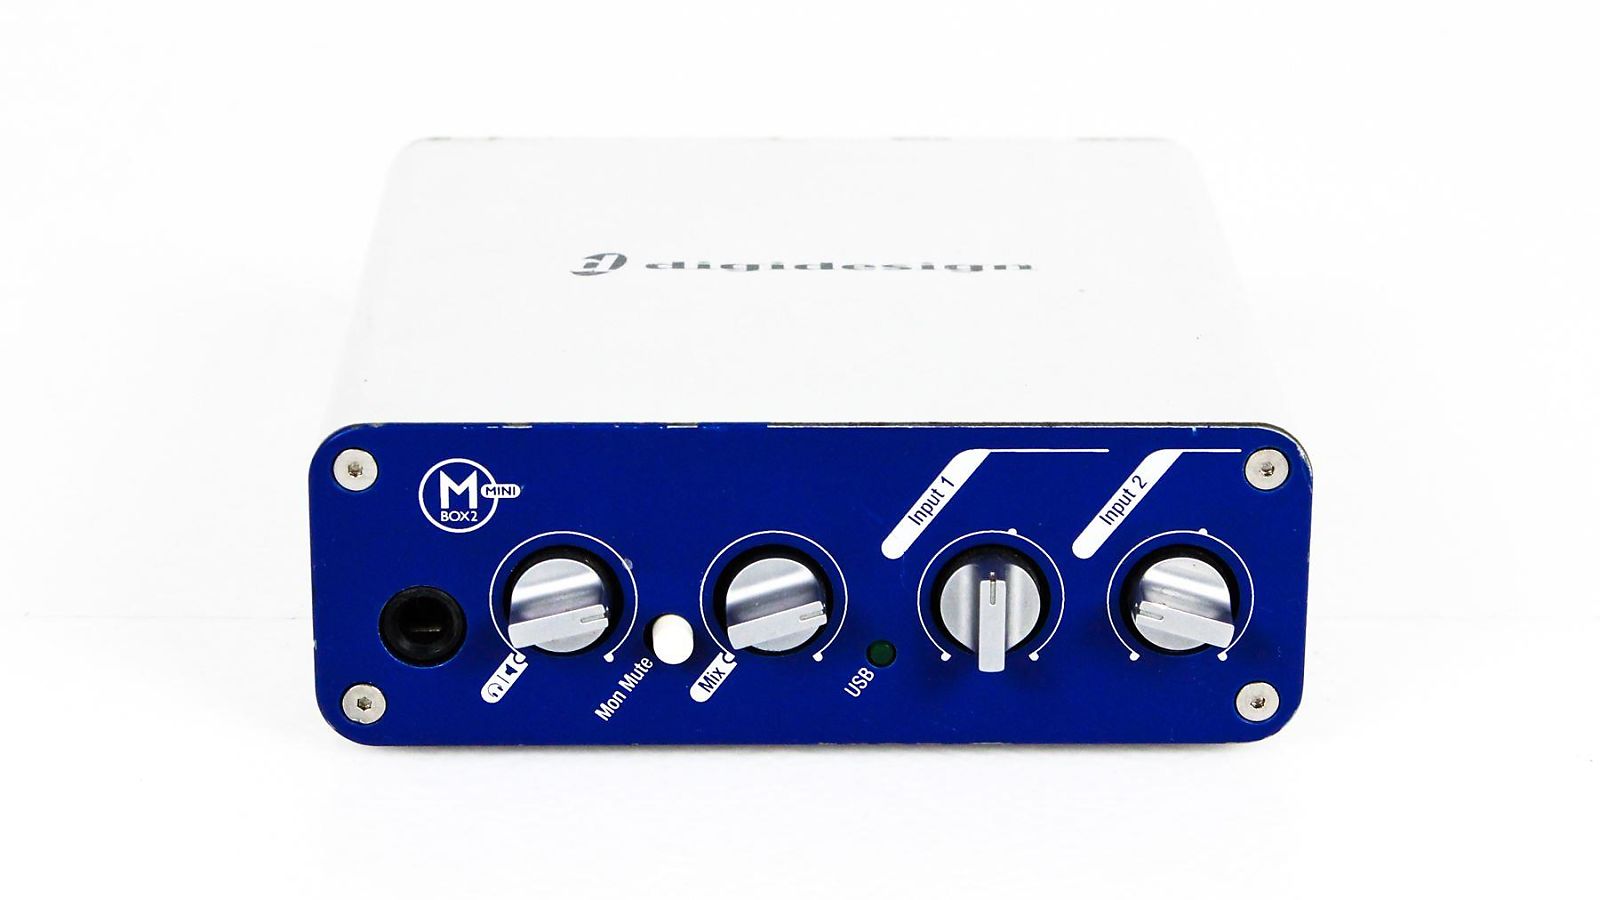 Digidesign MBox 2 Mini USB Audio Interface | Reverb